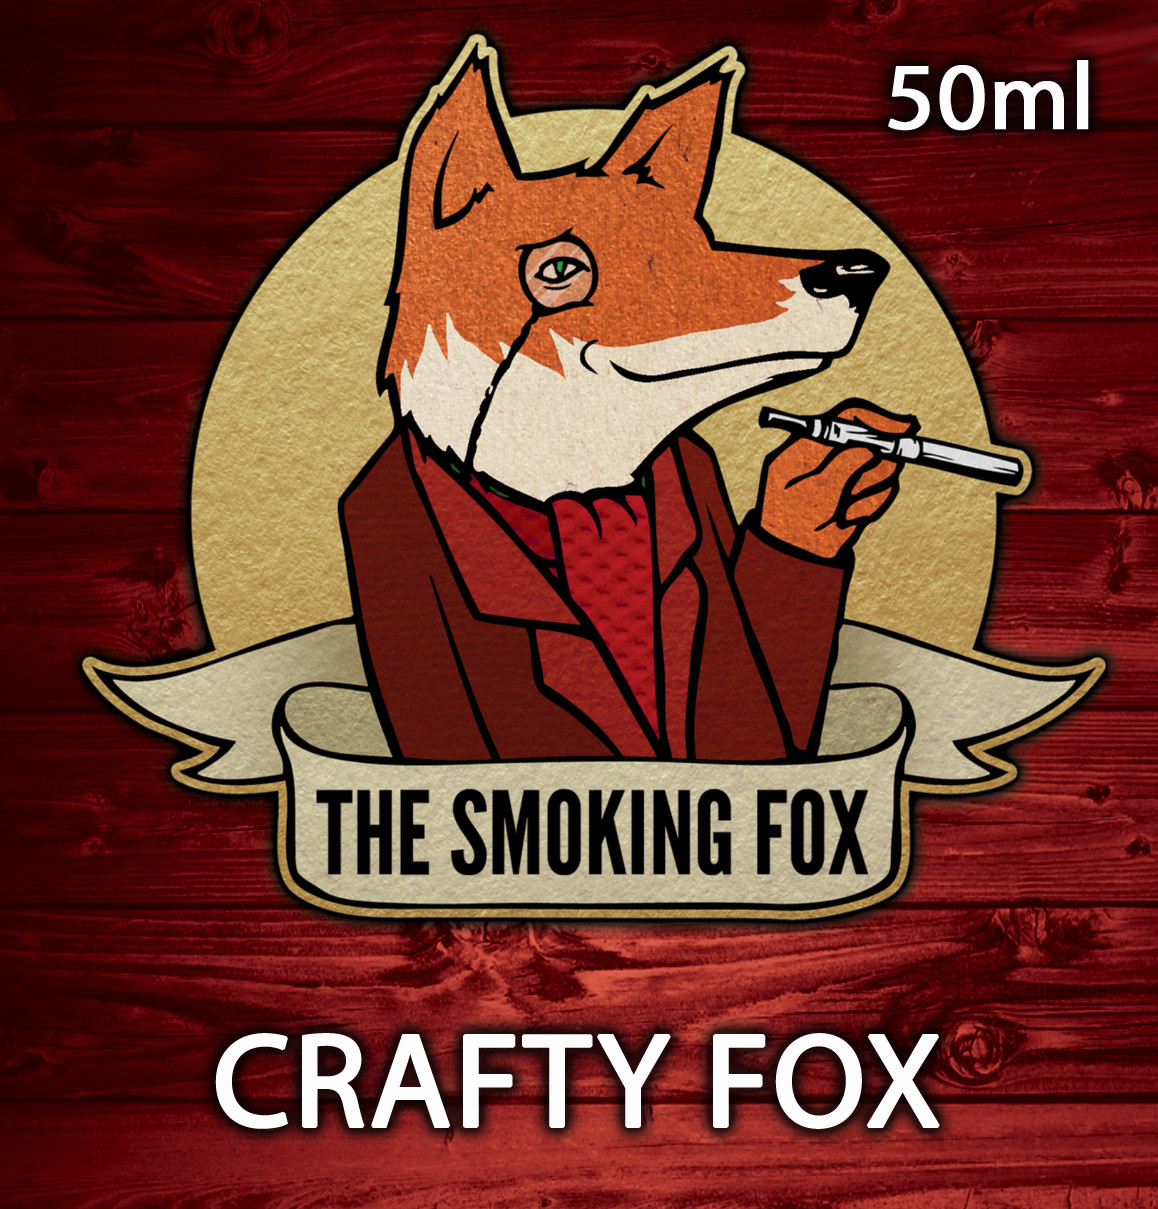 THE SMOKING FOX 50ml - CRAFTY FOX